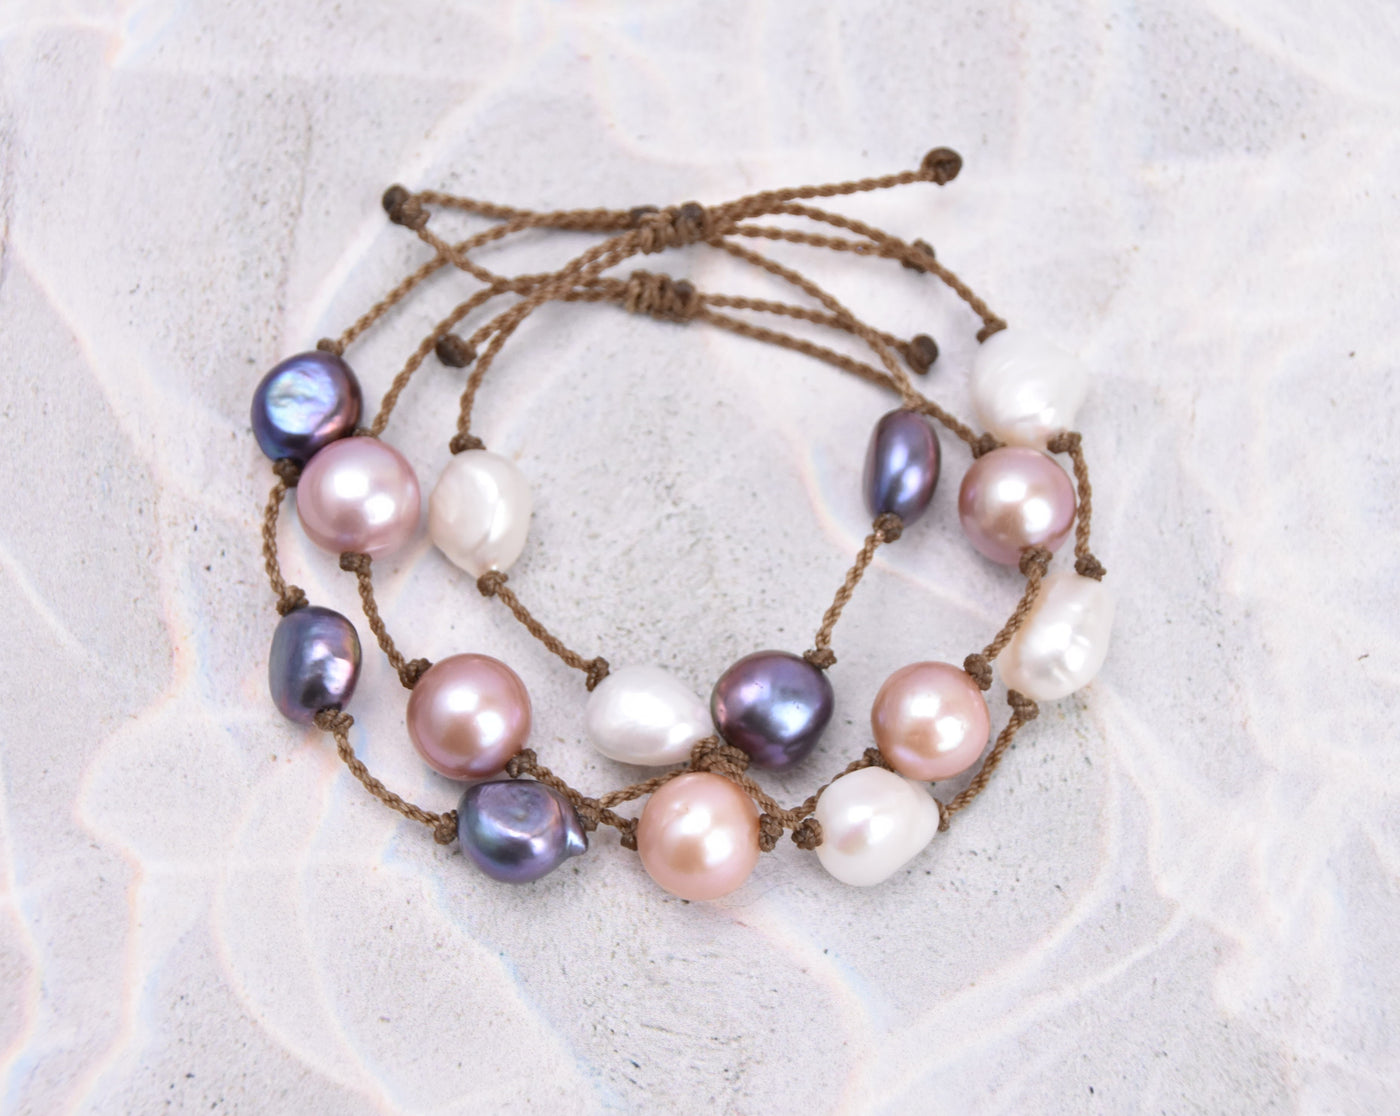 Pearls Please - Bracelet Stack (15% off)